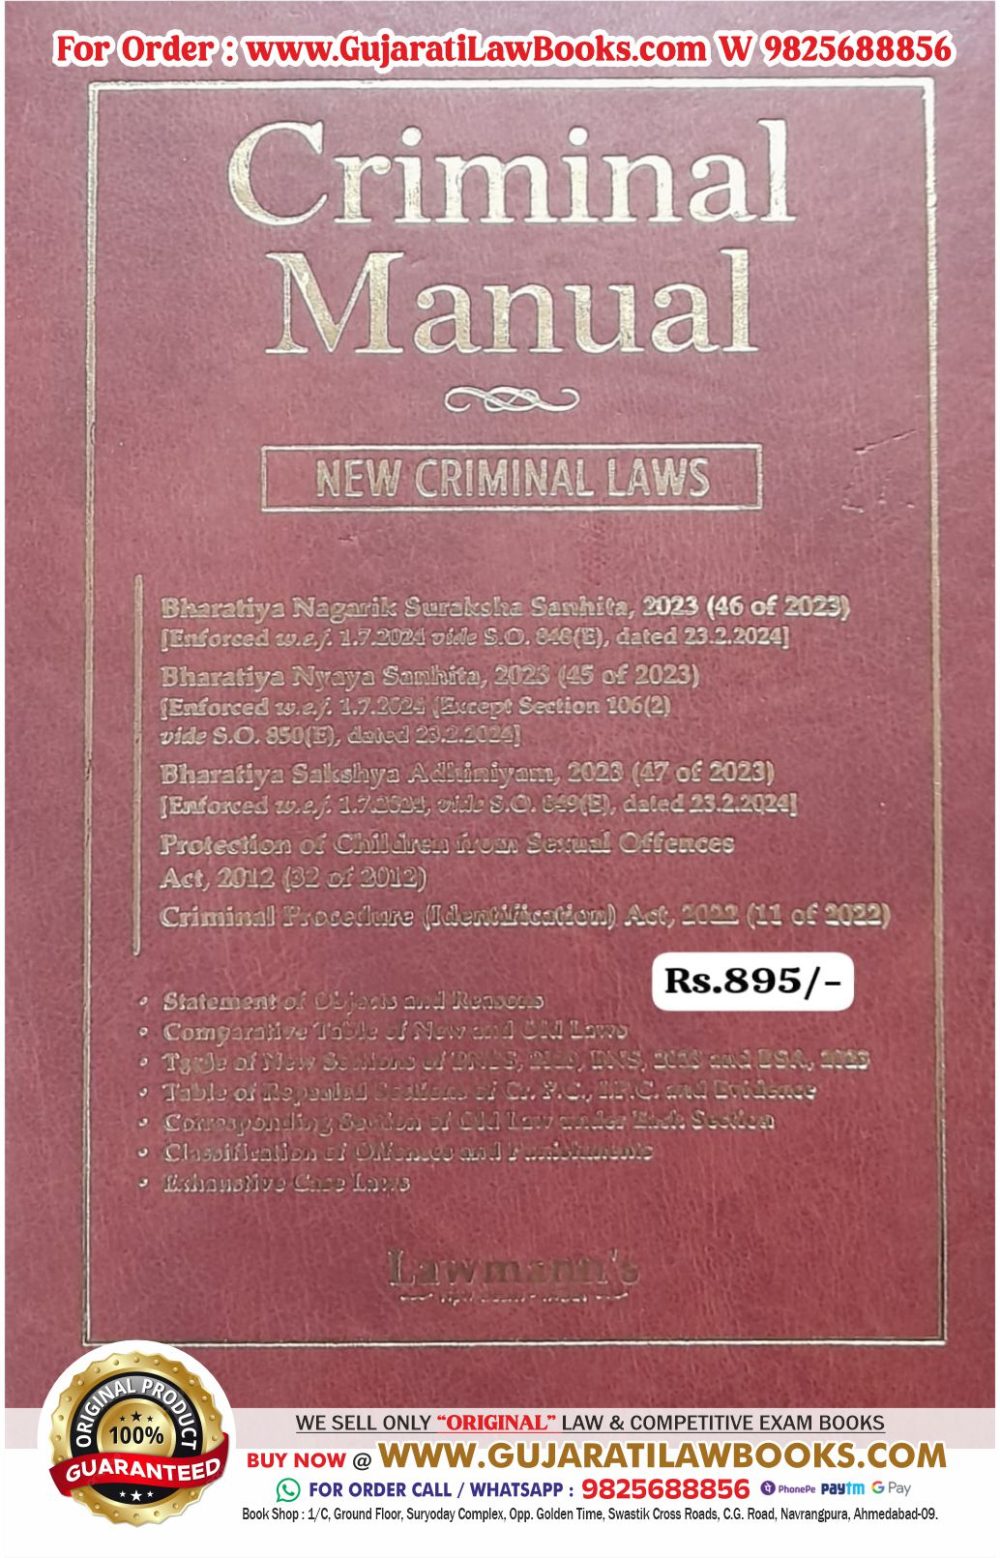 Criminal Manual - NEW CRIMINAL LAWS BNSS - BNS - BAS - Latest 2024 Edition Lawmann